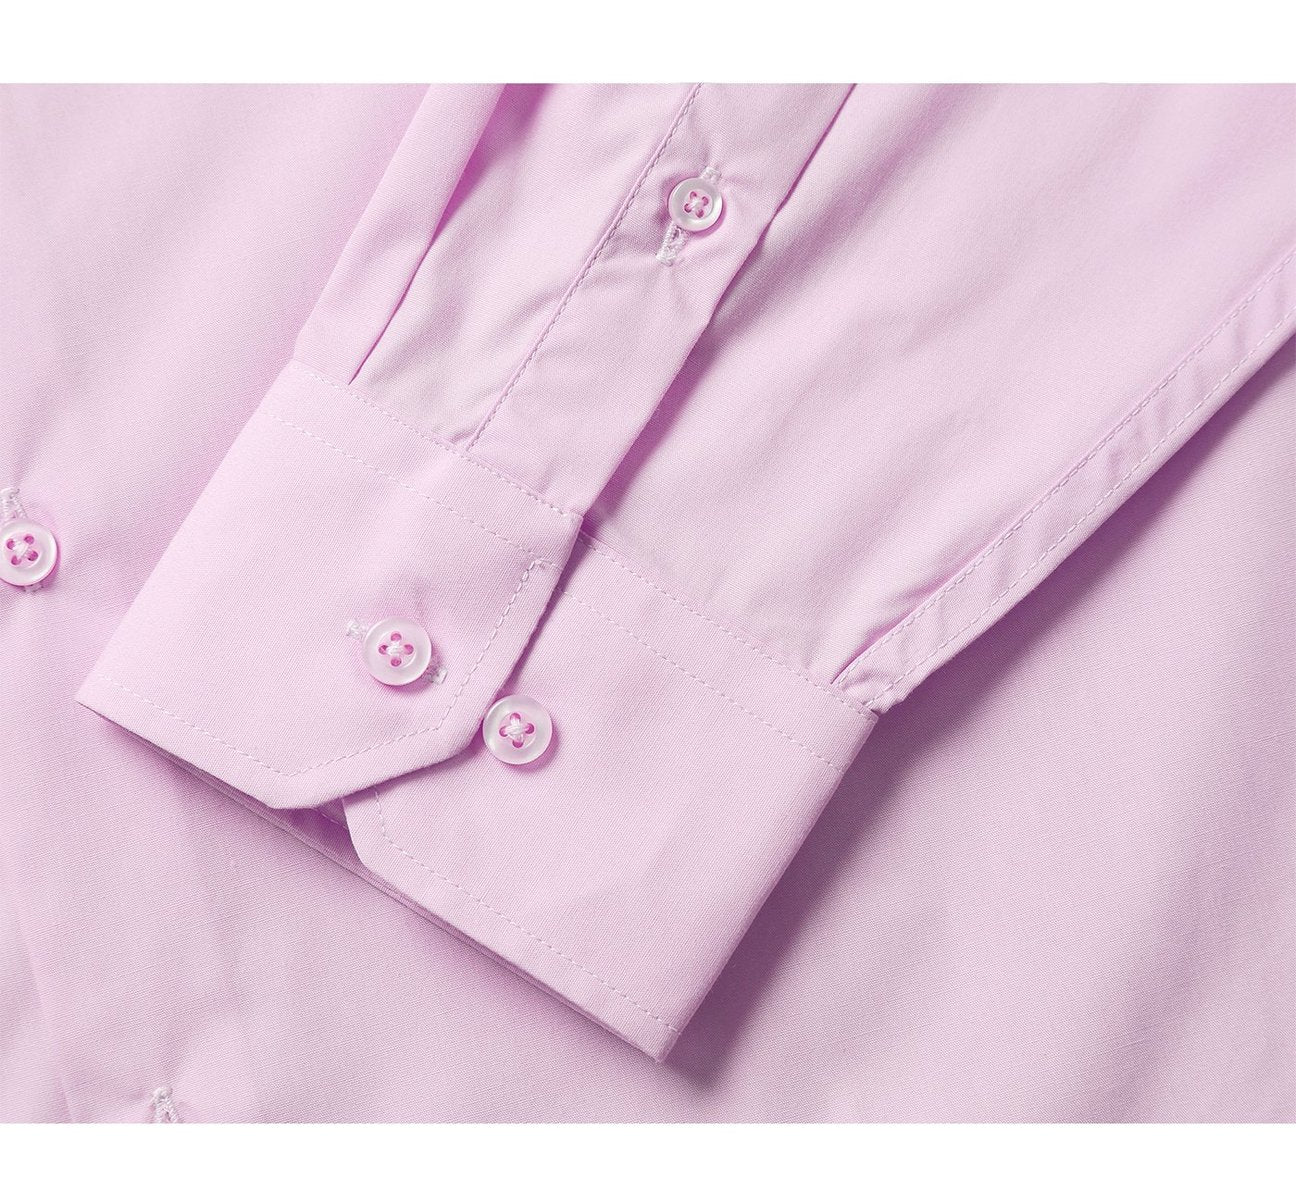 RENOIR Pink Classic/Regular Fit Long Sleeve Spread Collar Dress Shirt TC647